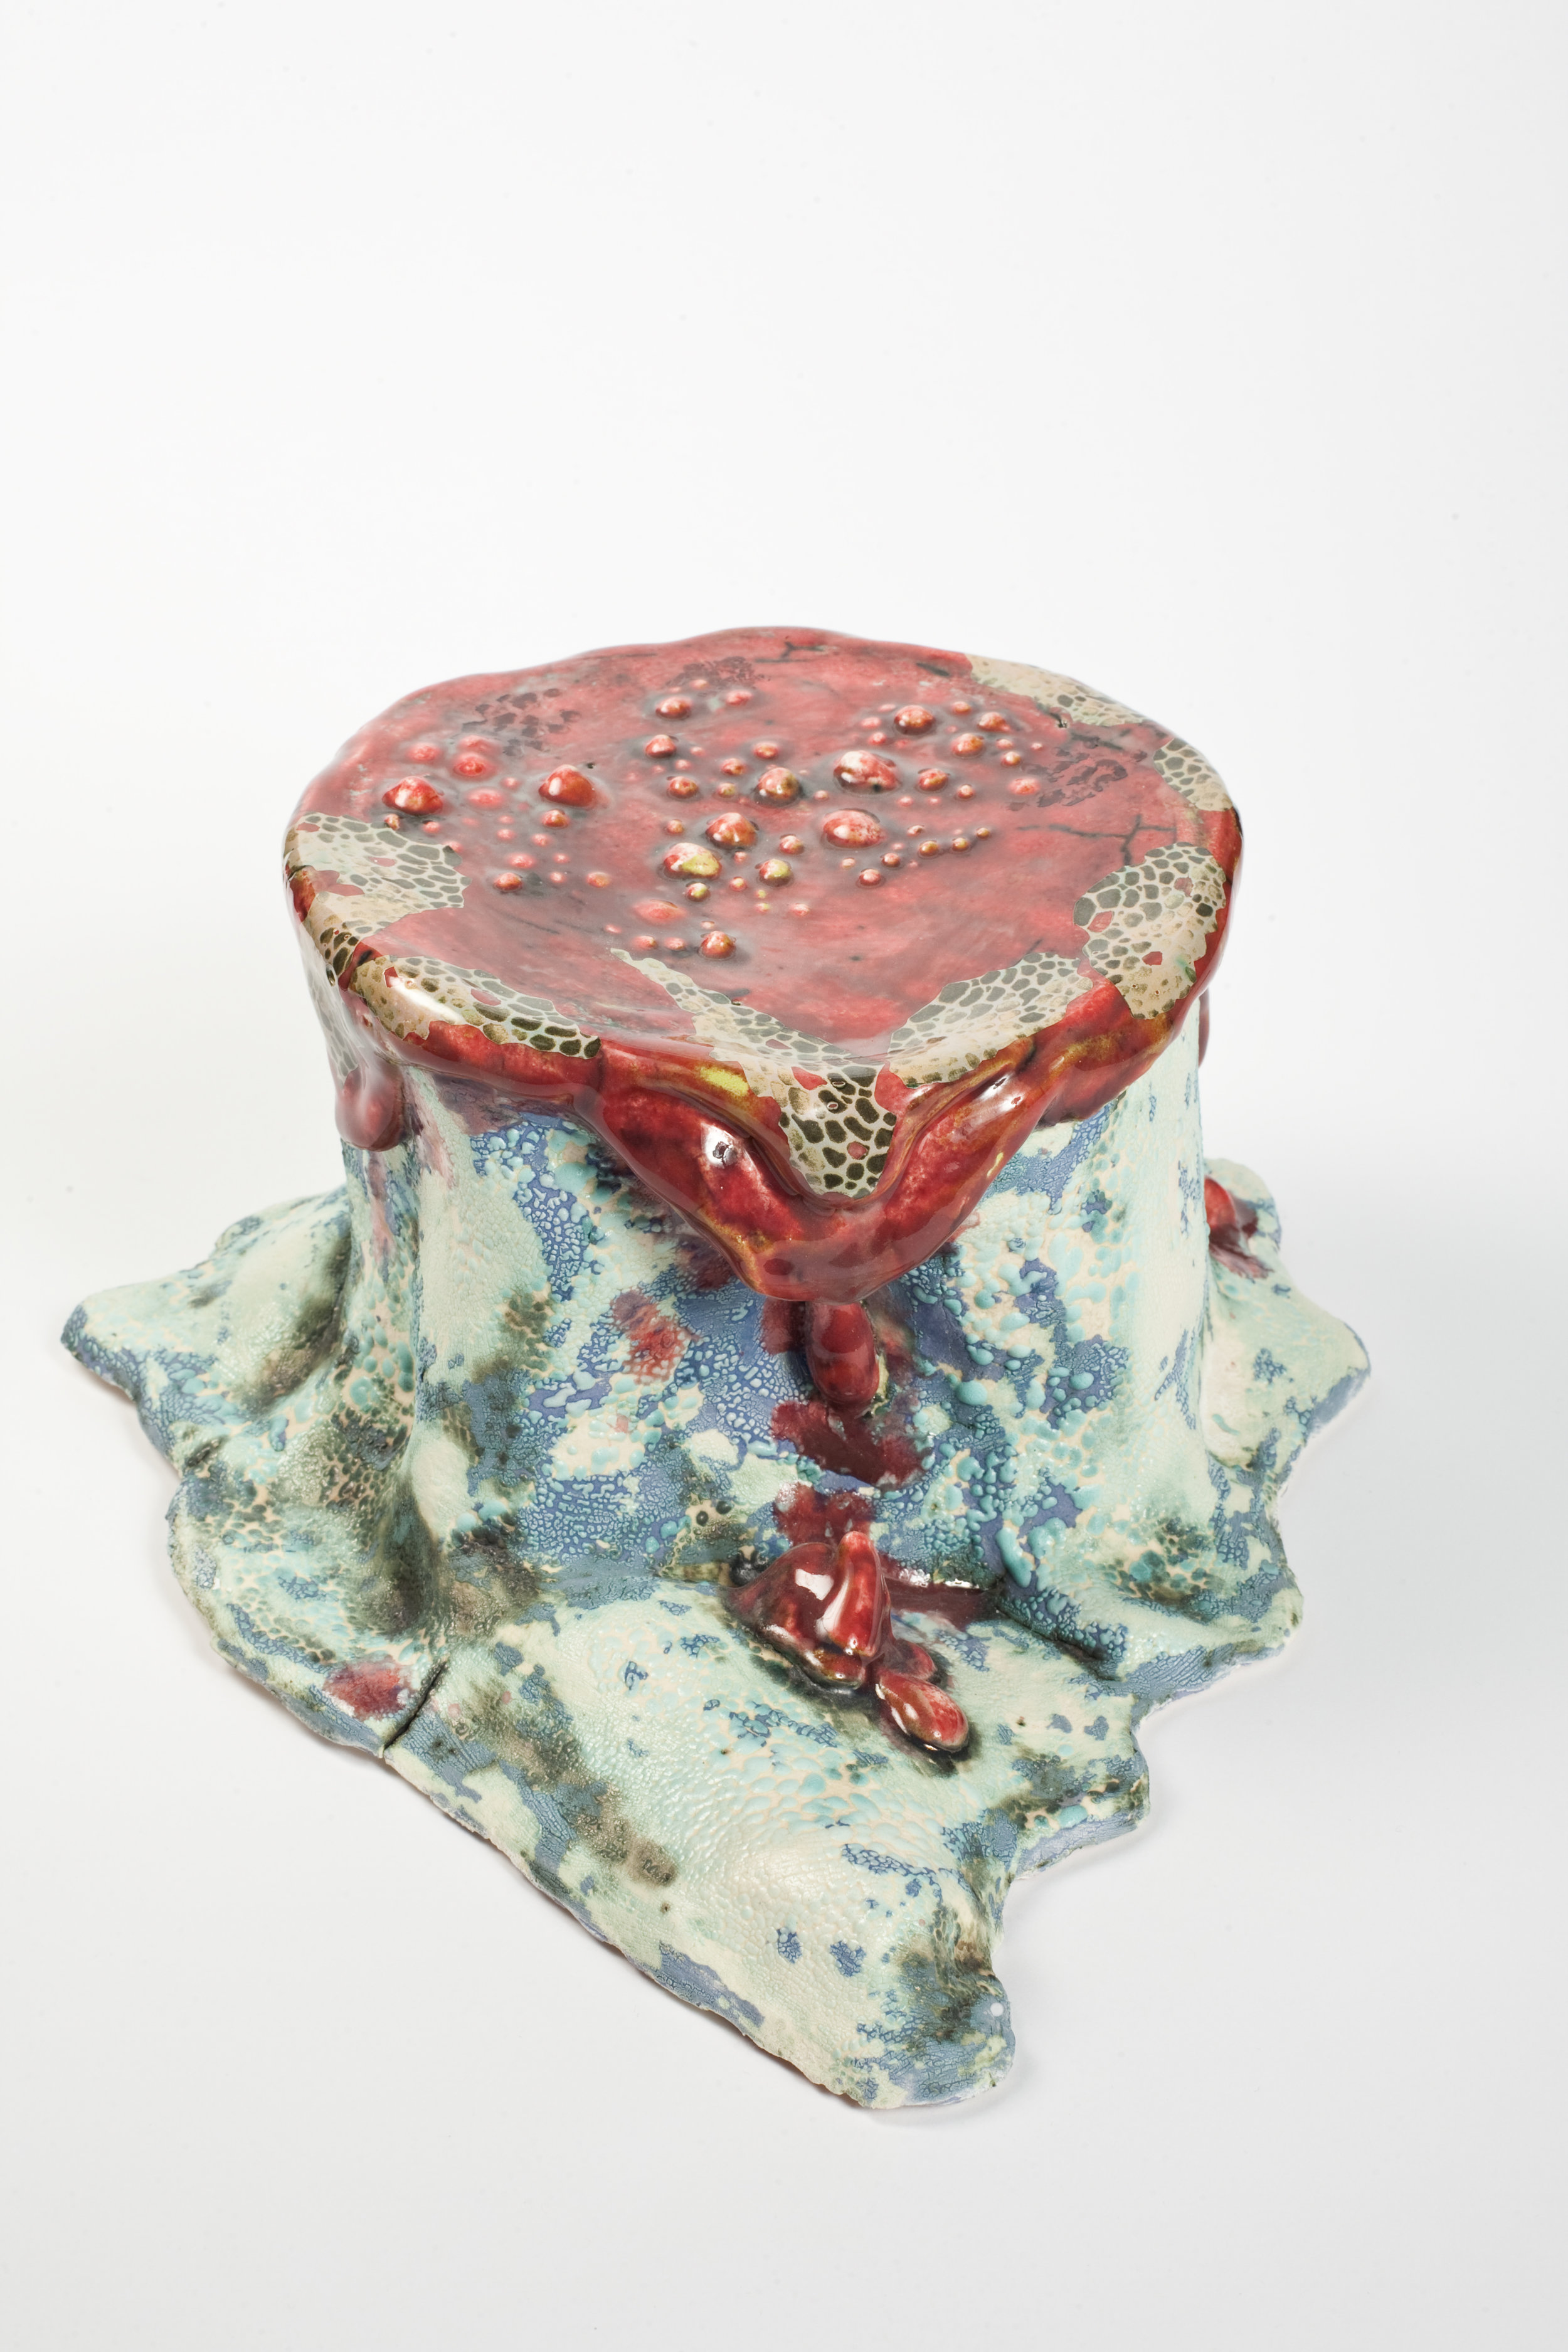   Untitled   Glazed Stoneware, Ceramic Decals  2009  Photo:&nbsp; Daniel Shea &nbsp;    